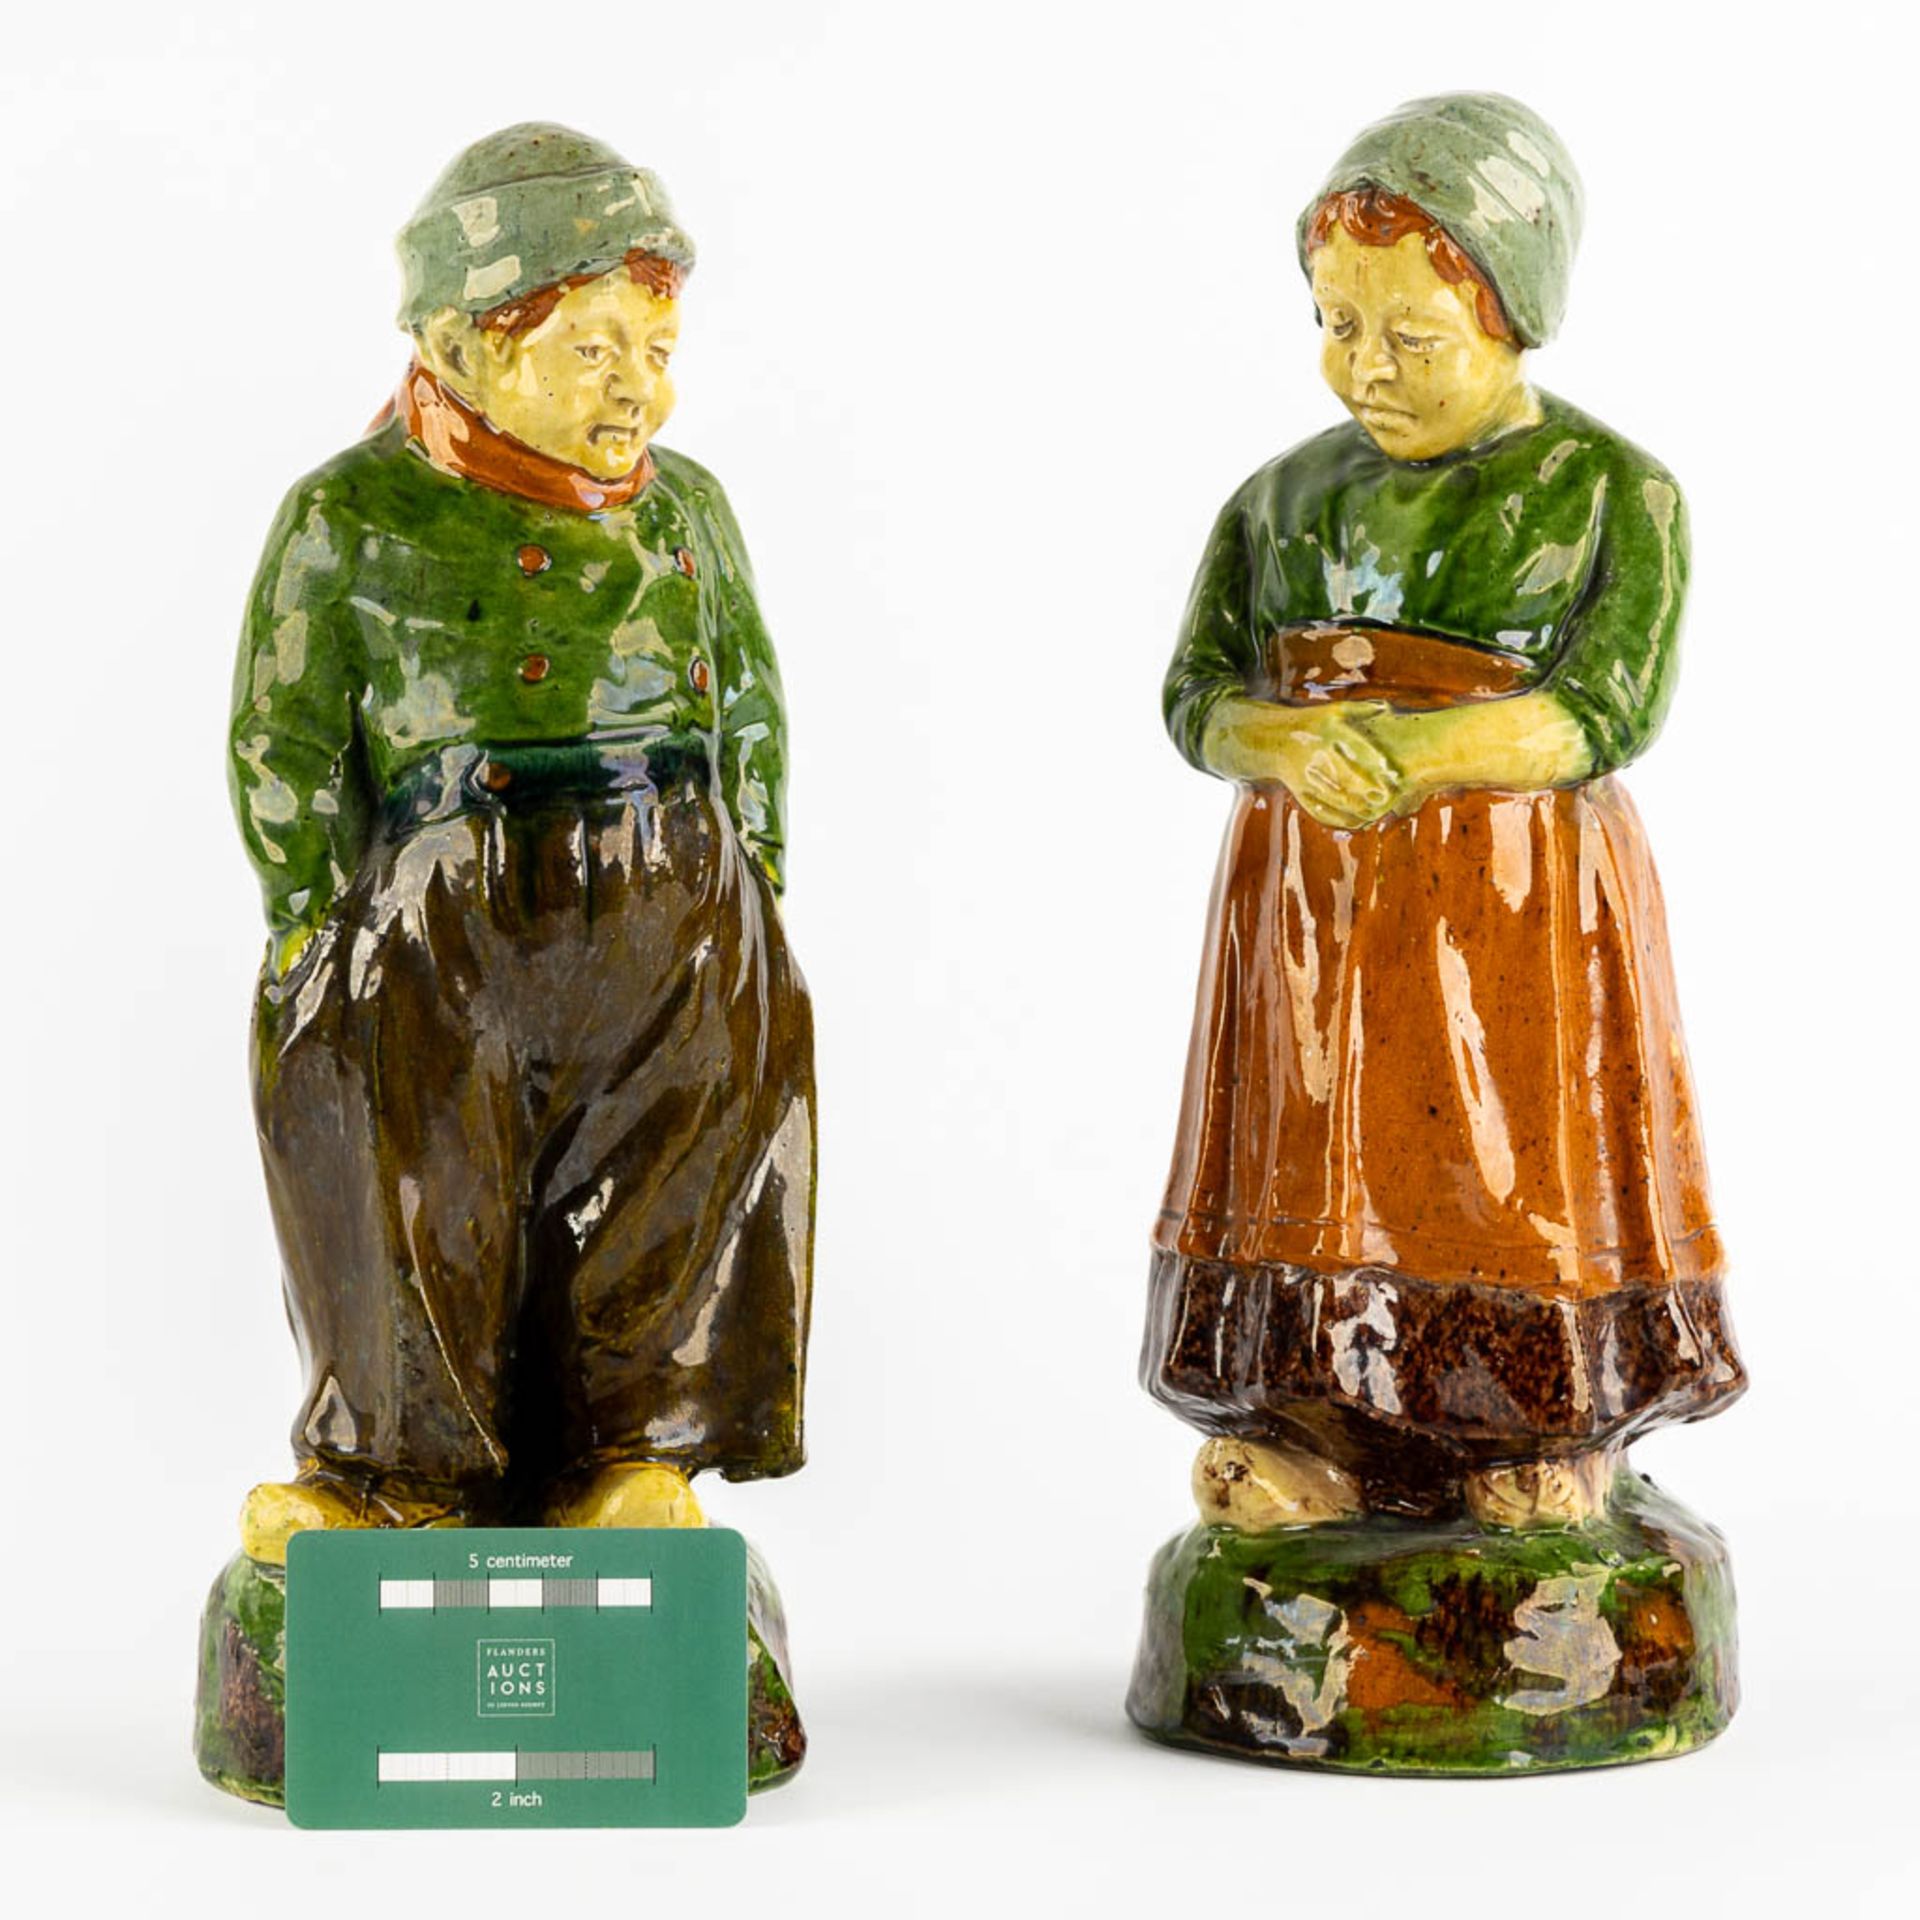 Figurine of a Man and Woman, Flemish Earthenware, possibly Caessens. Circa 1900. (H:32 x D:12 cm) - Bild 2 aus 9